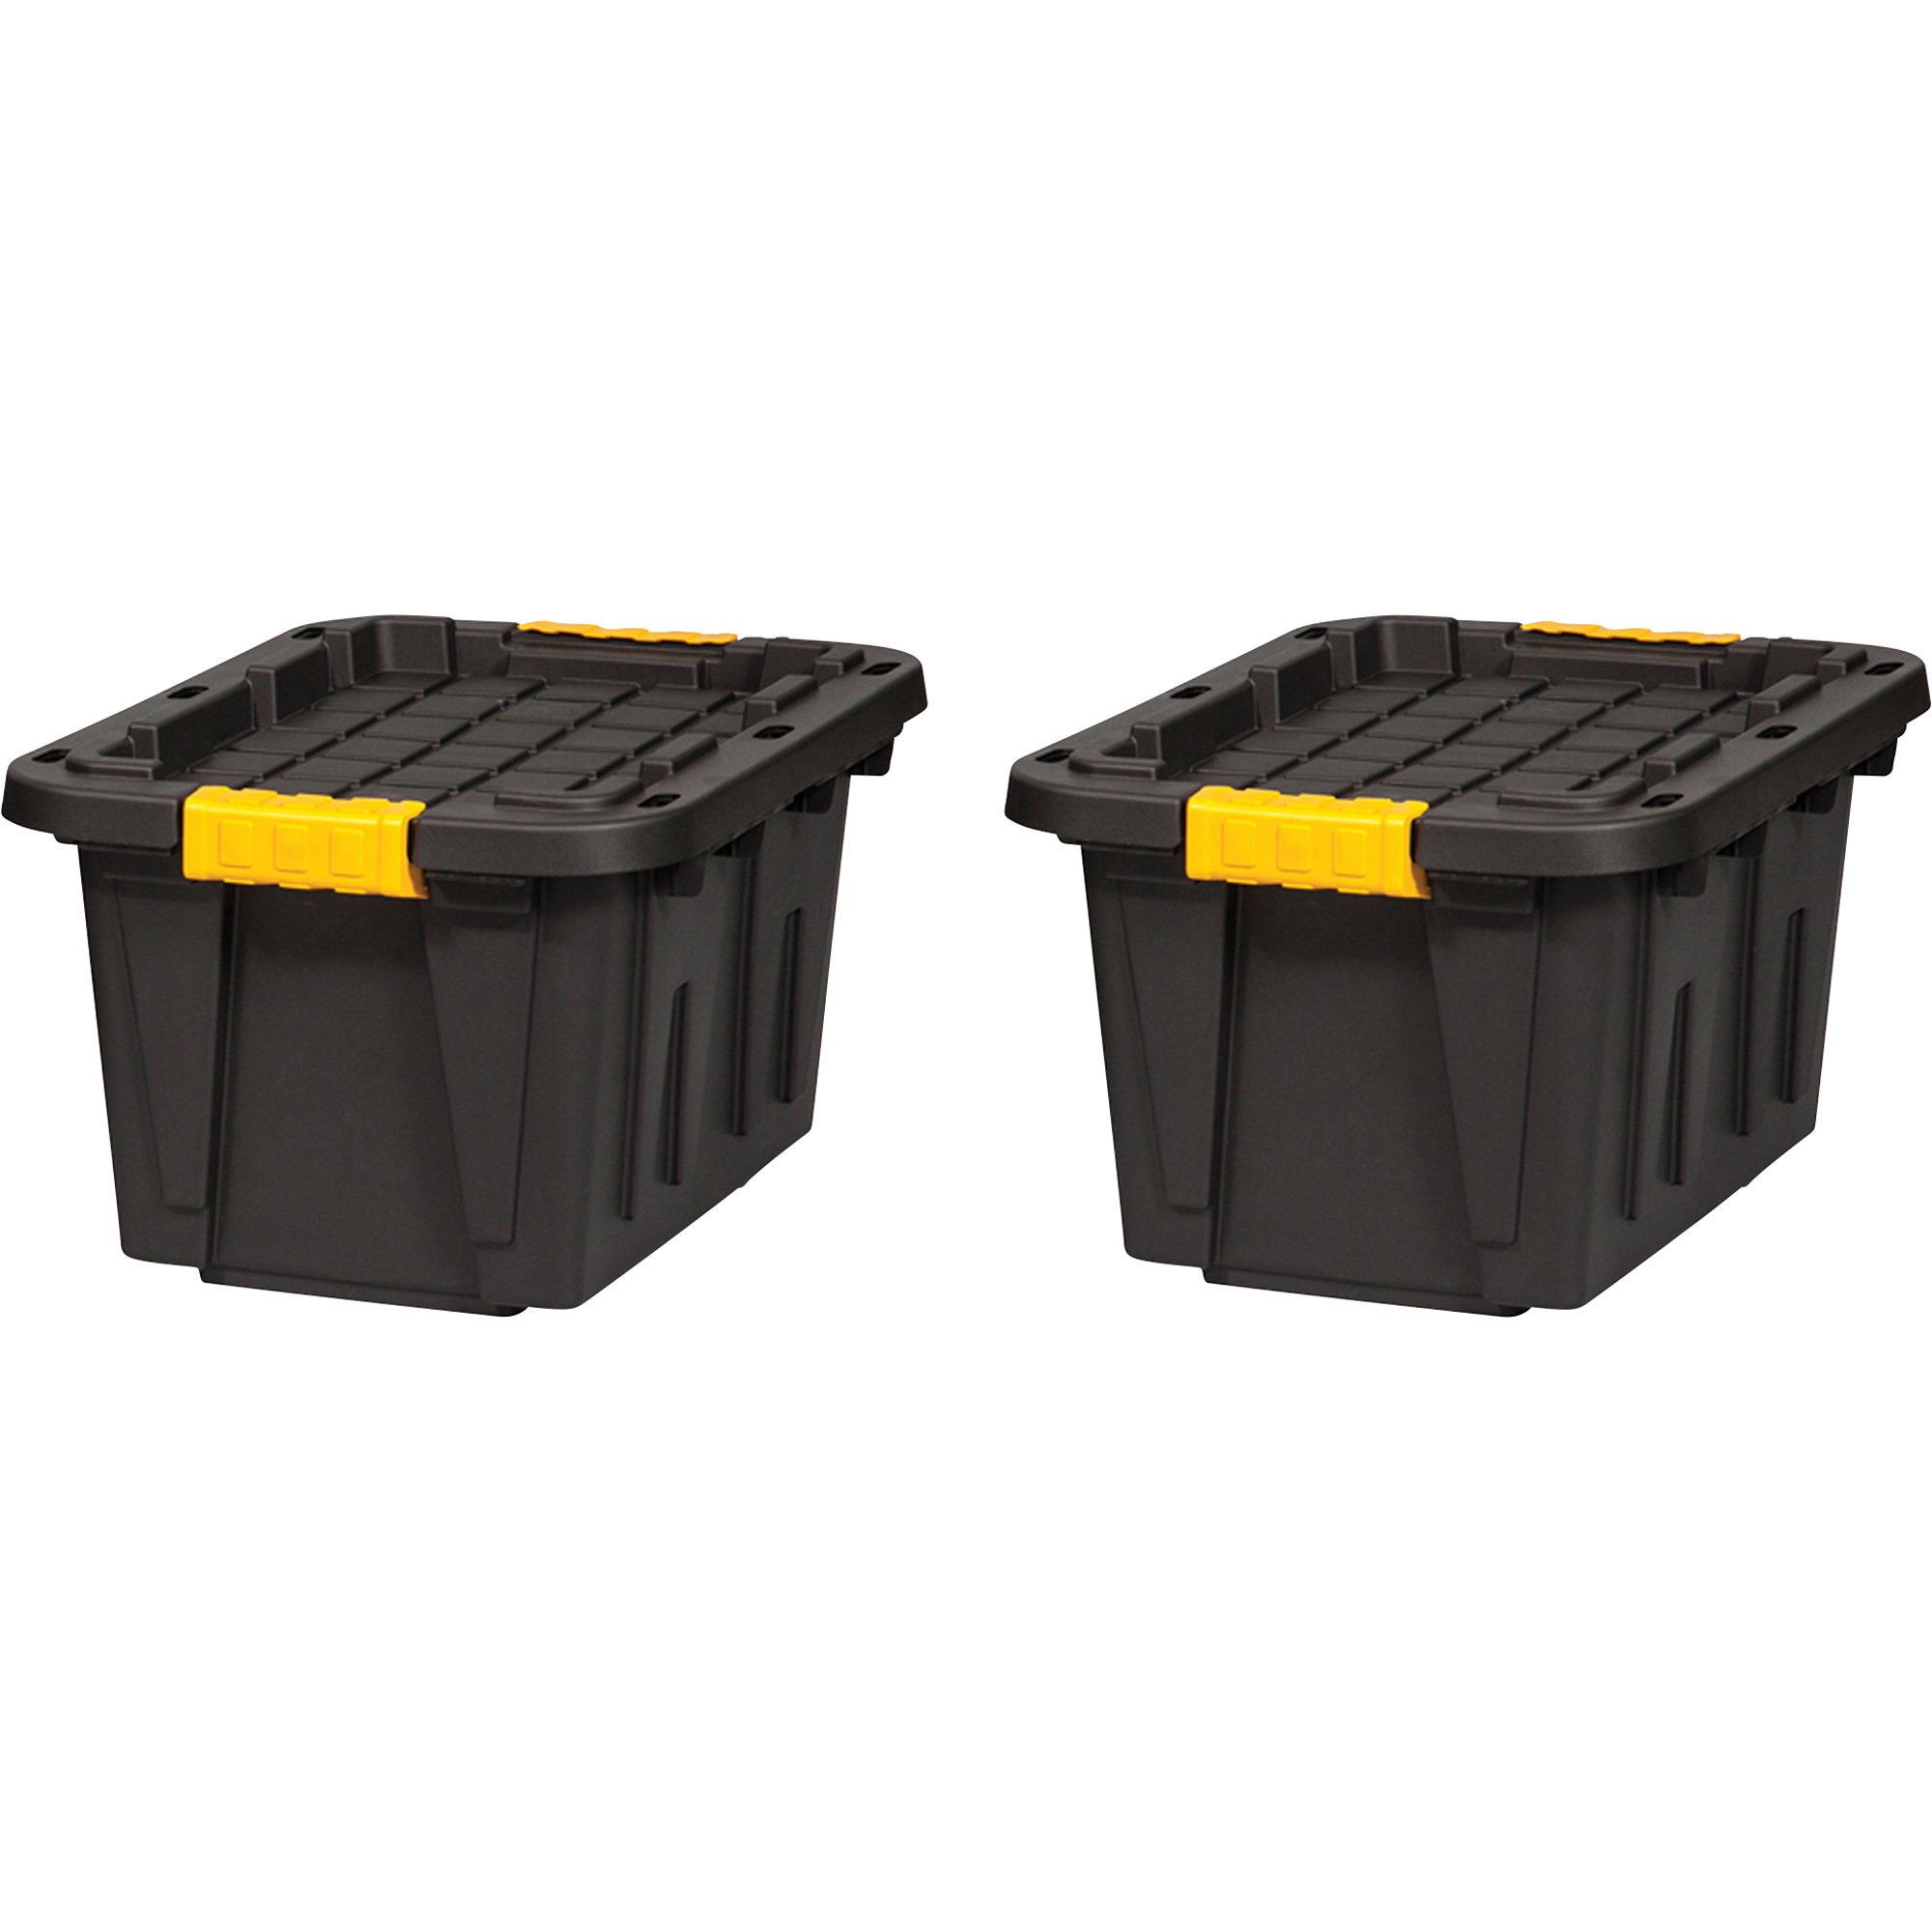 Tough Box Latching Storage Tote — 2-Pack, 12-Gallon